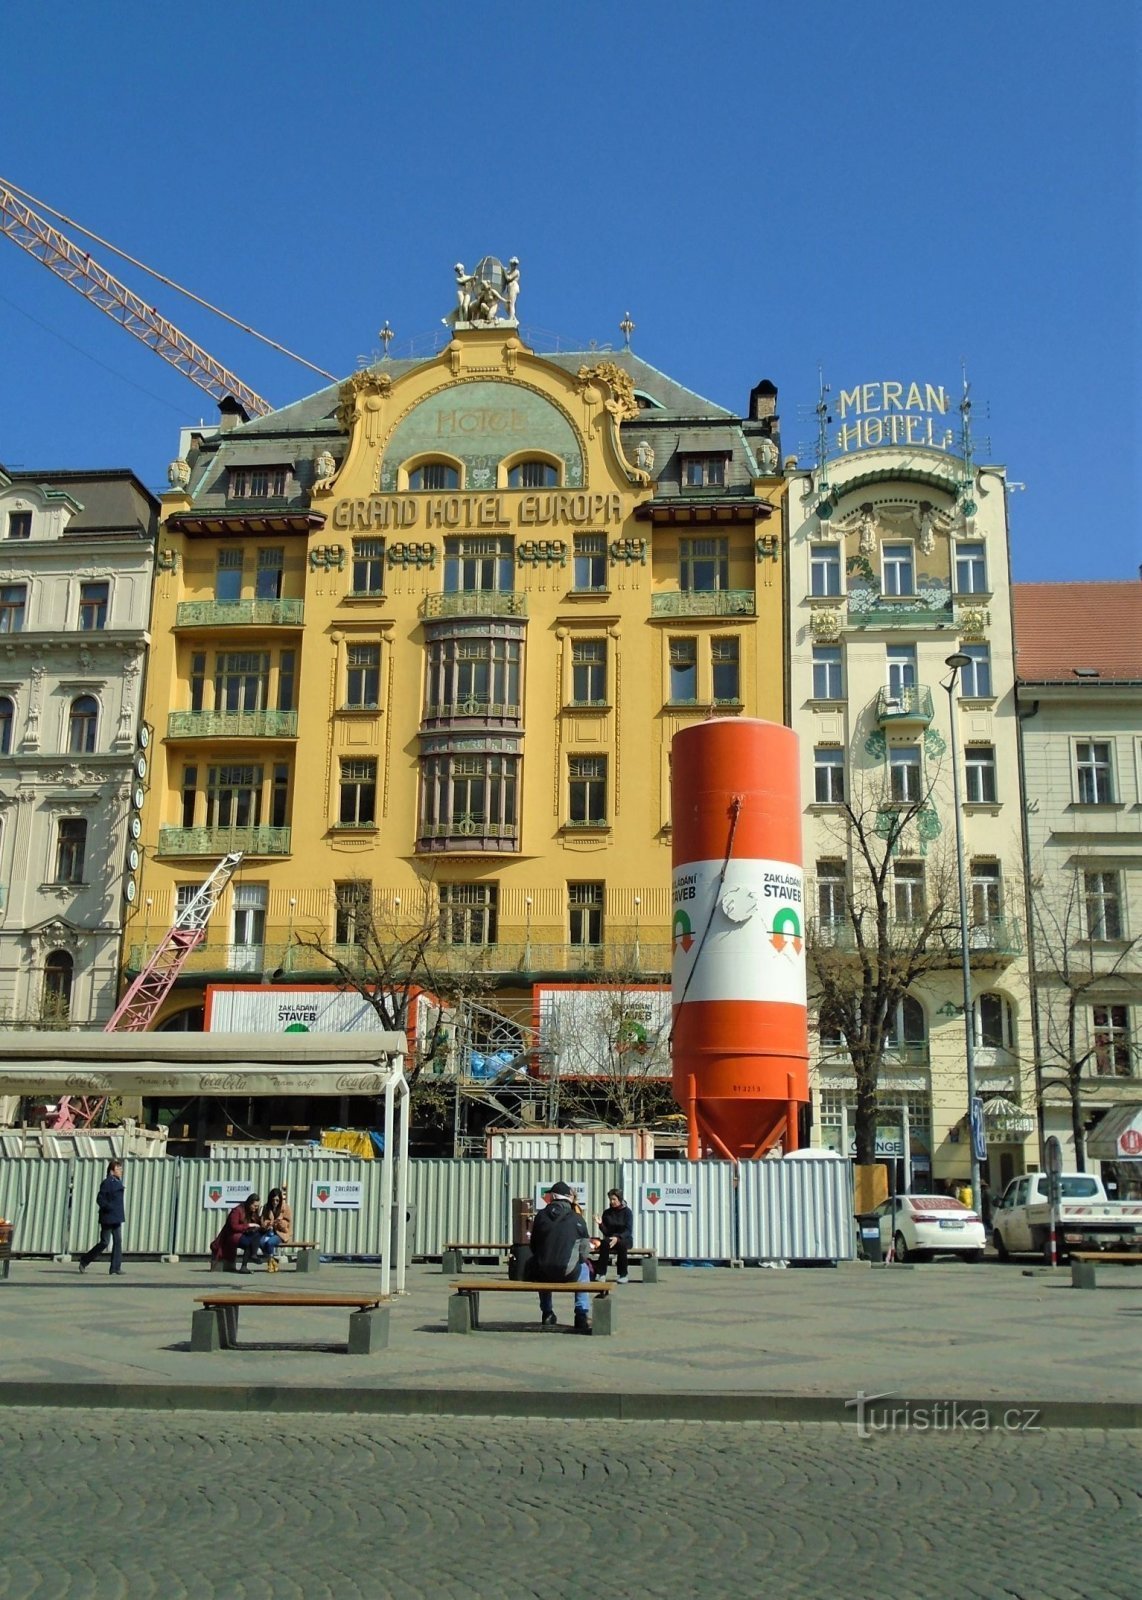 Grand Hotel Evropa et Hotel Meran (Prague, 1.4.2019er avril XNUMX)